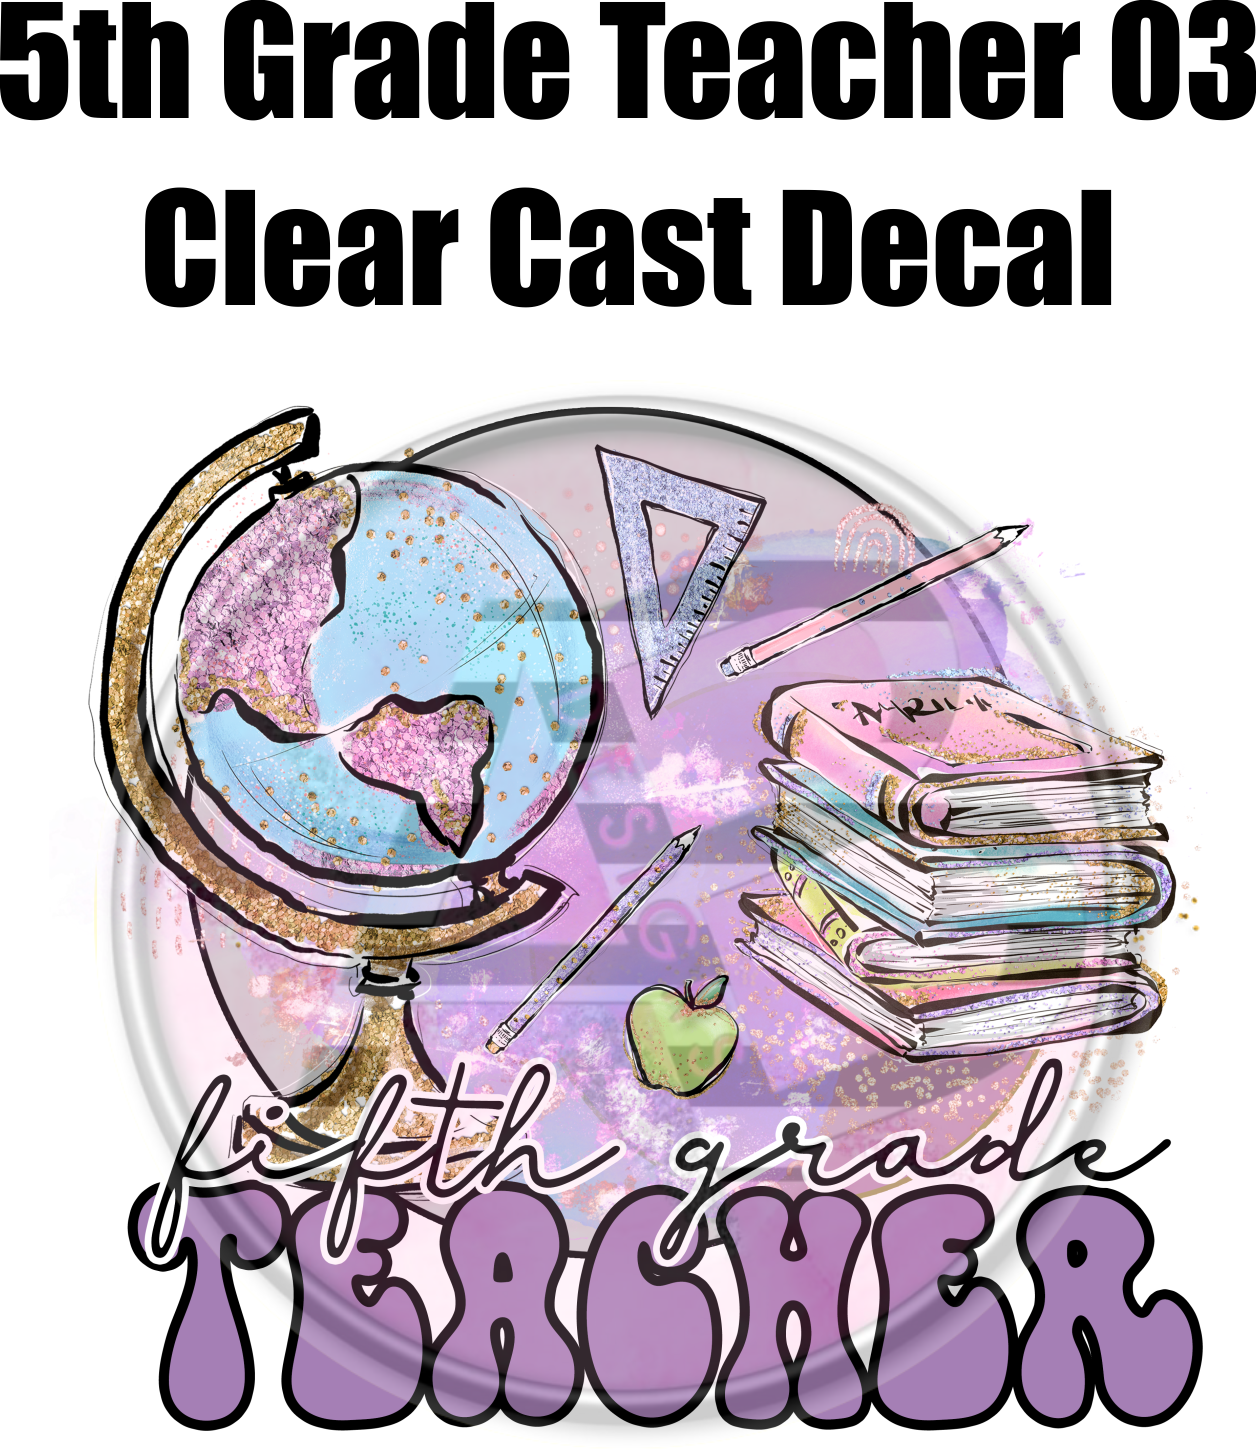 5th Grade Teacher 03 - Clear Cast Decal - 57